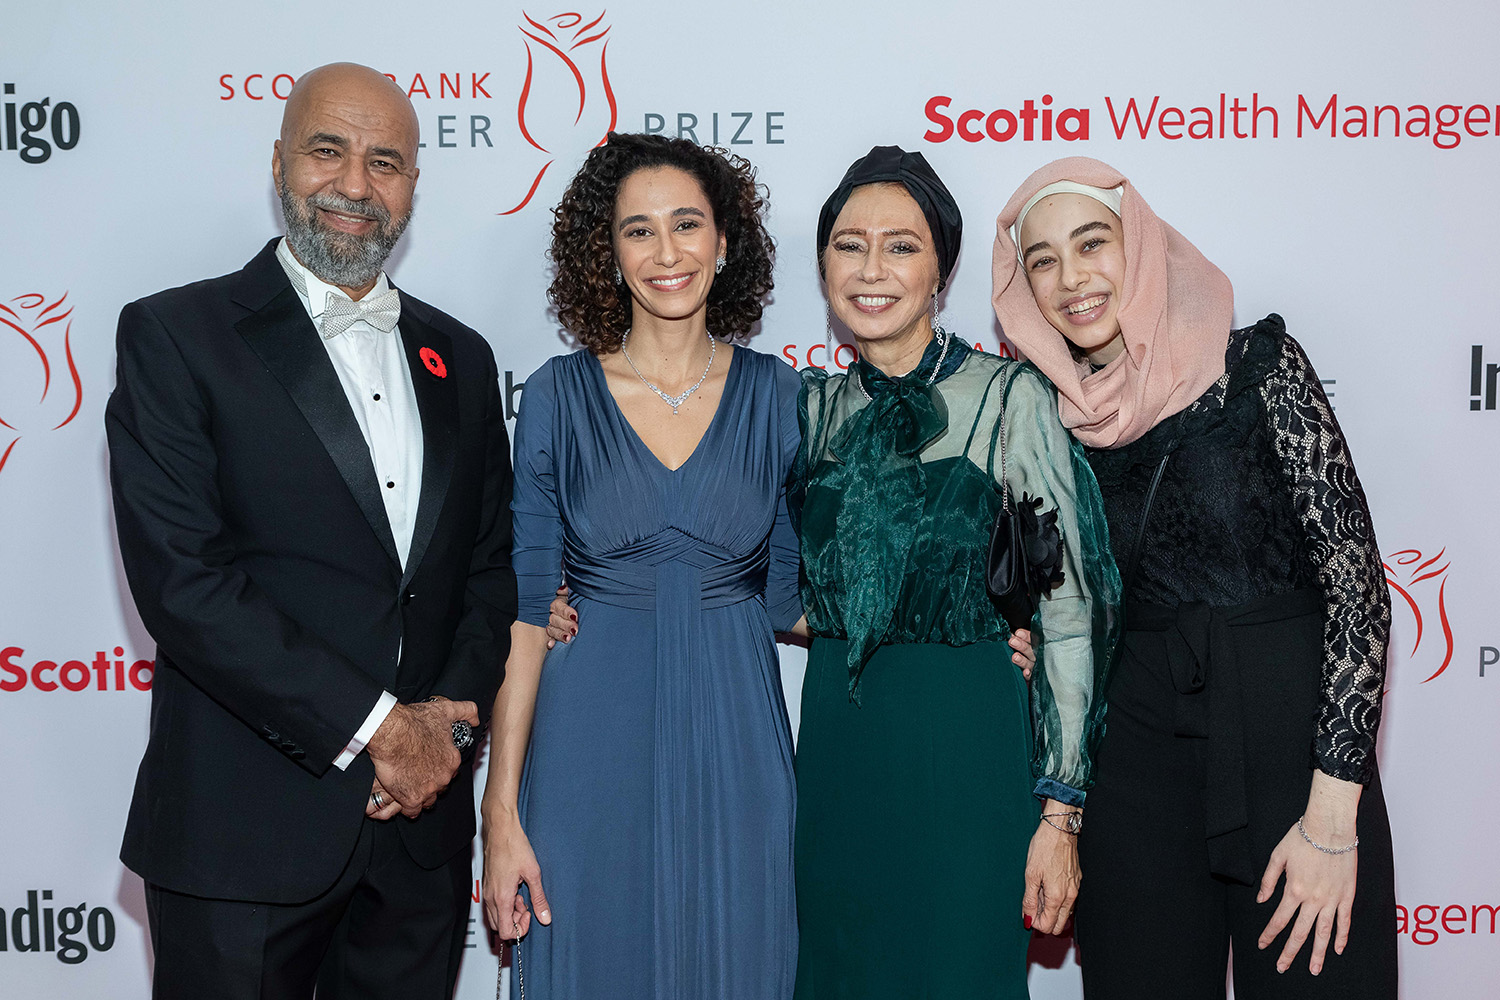 2022 Scotiabank Giller Prize Gala